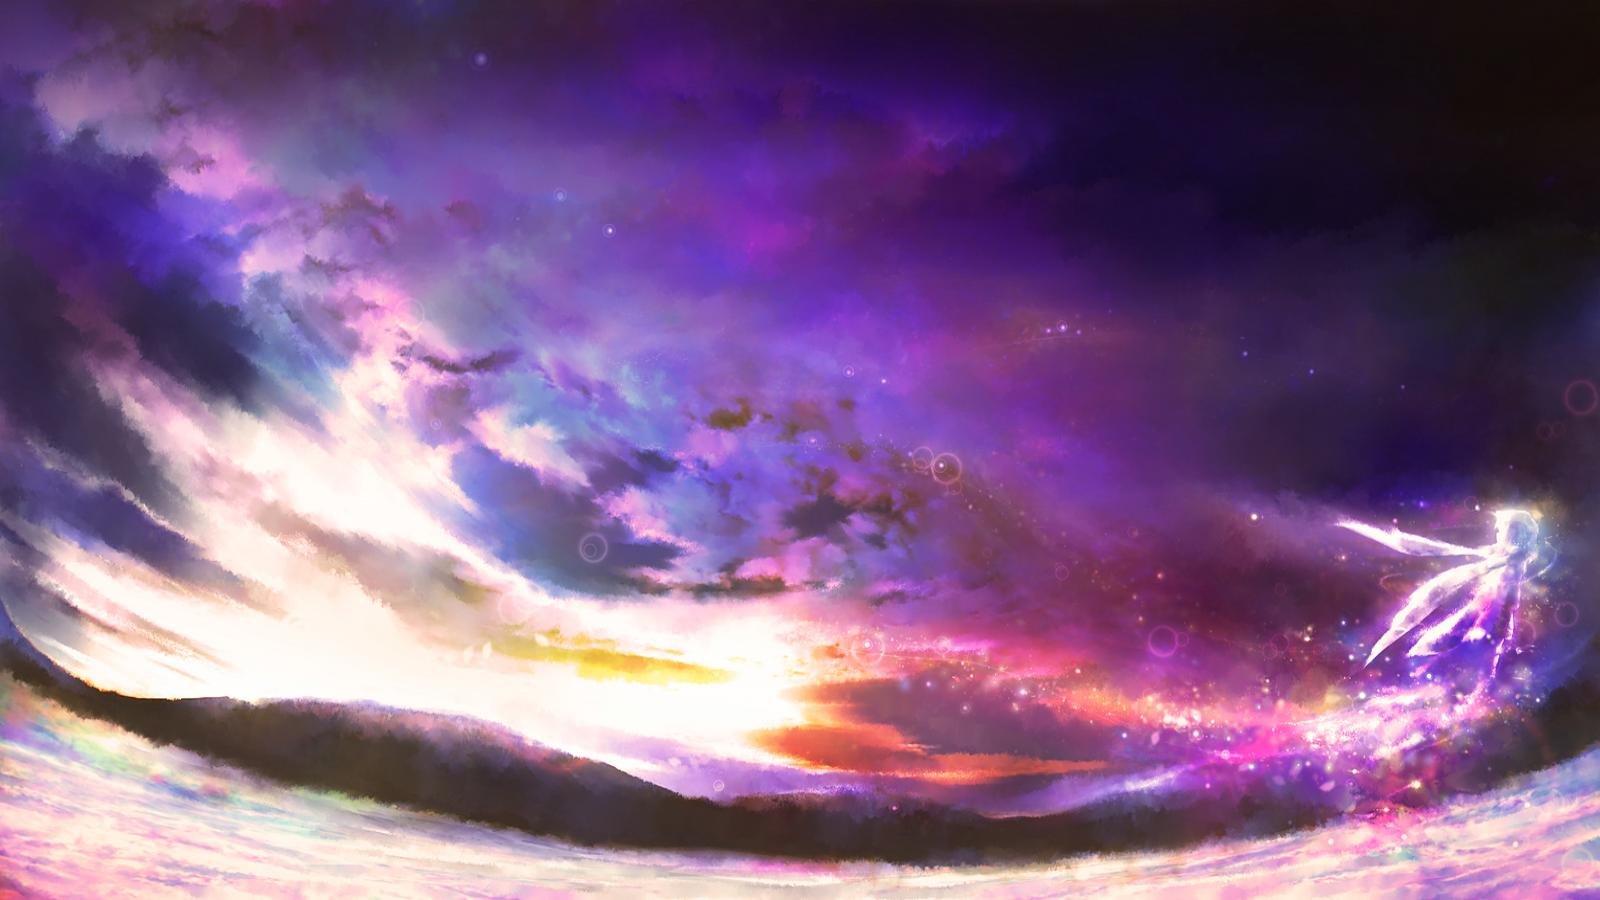 Scenery anime wallpaper 1600x900 desktop background